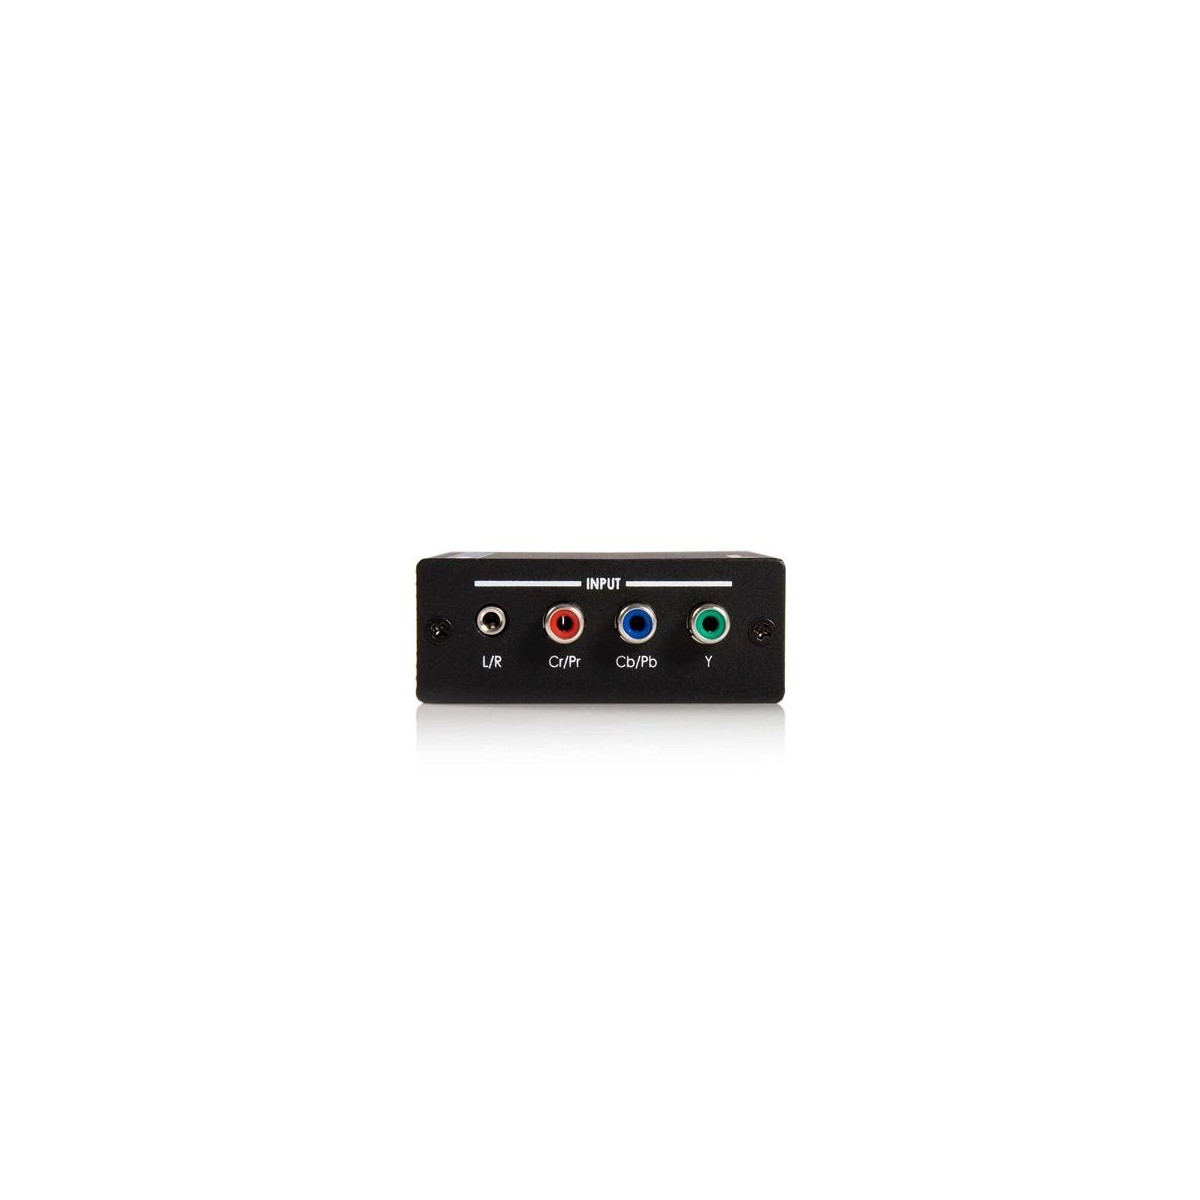 StarTech.com Component to HDMI Video Converter with Audio - 1080p - Black - RoHS - CE - FCC - HDMI - 5 V - 80 mm